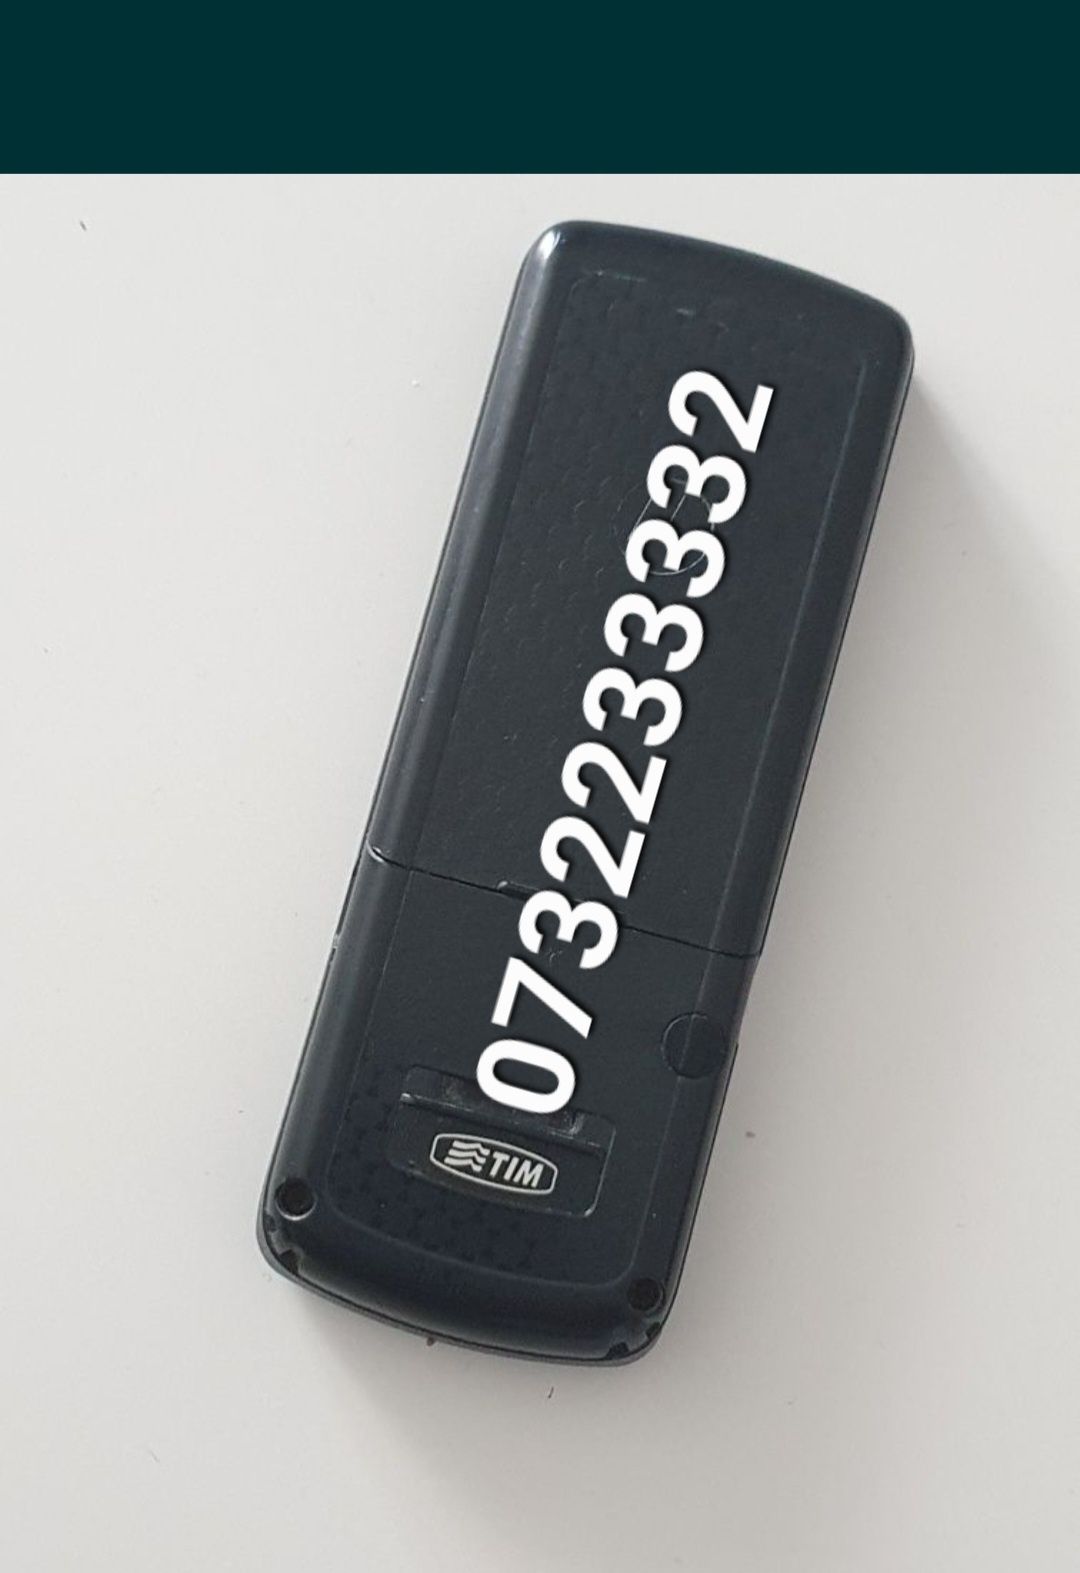 Telefon Motorola cu butoane si display mare